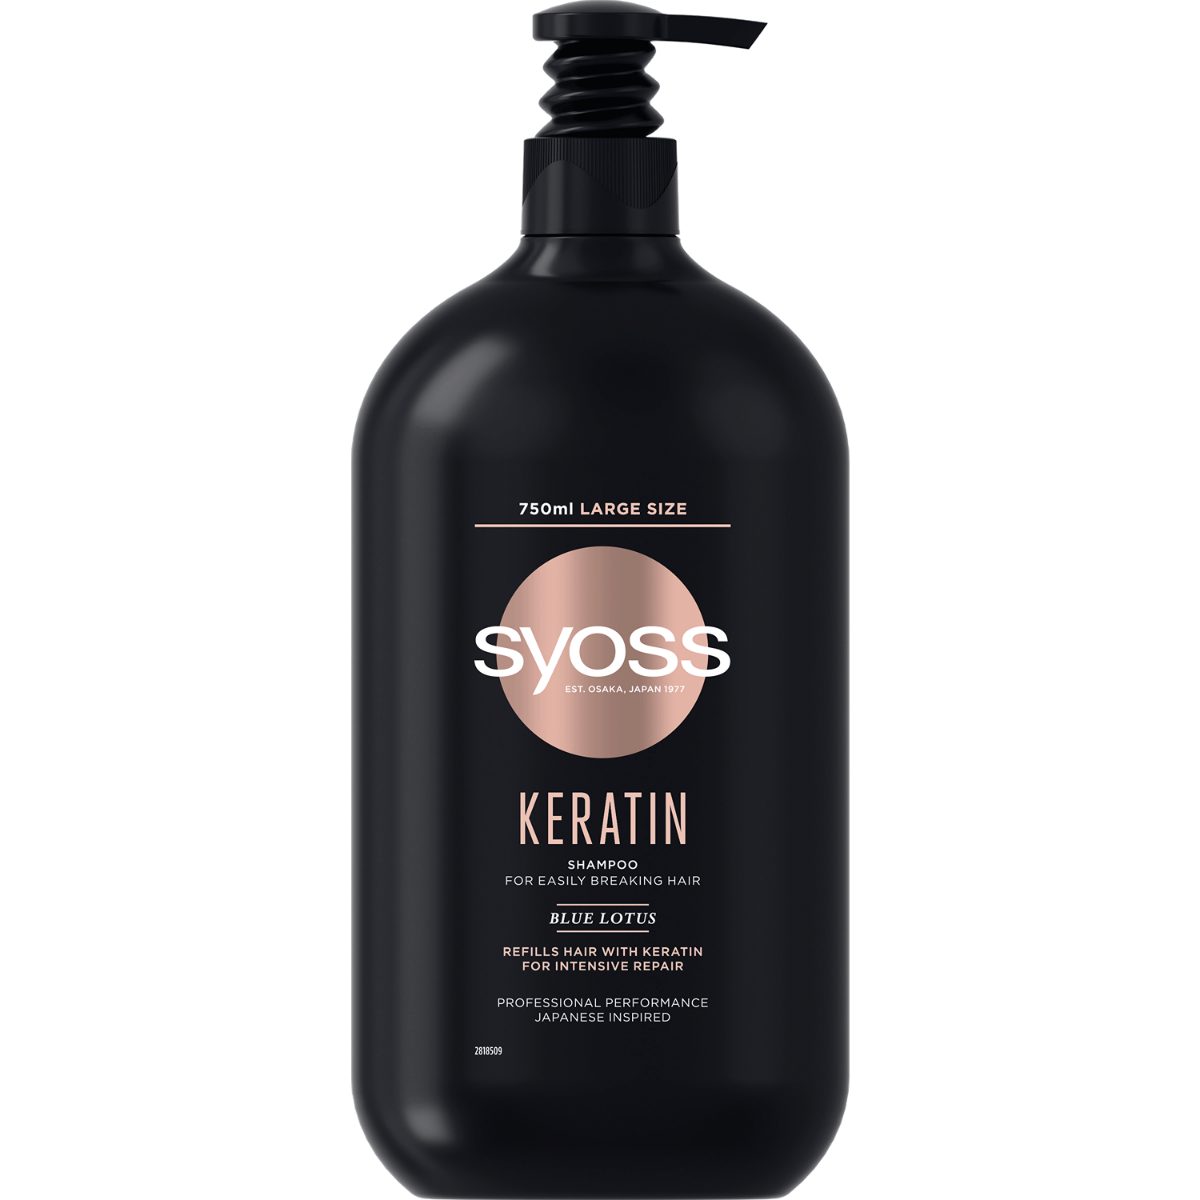 syoss repair szampon skład